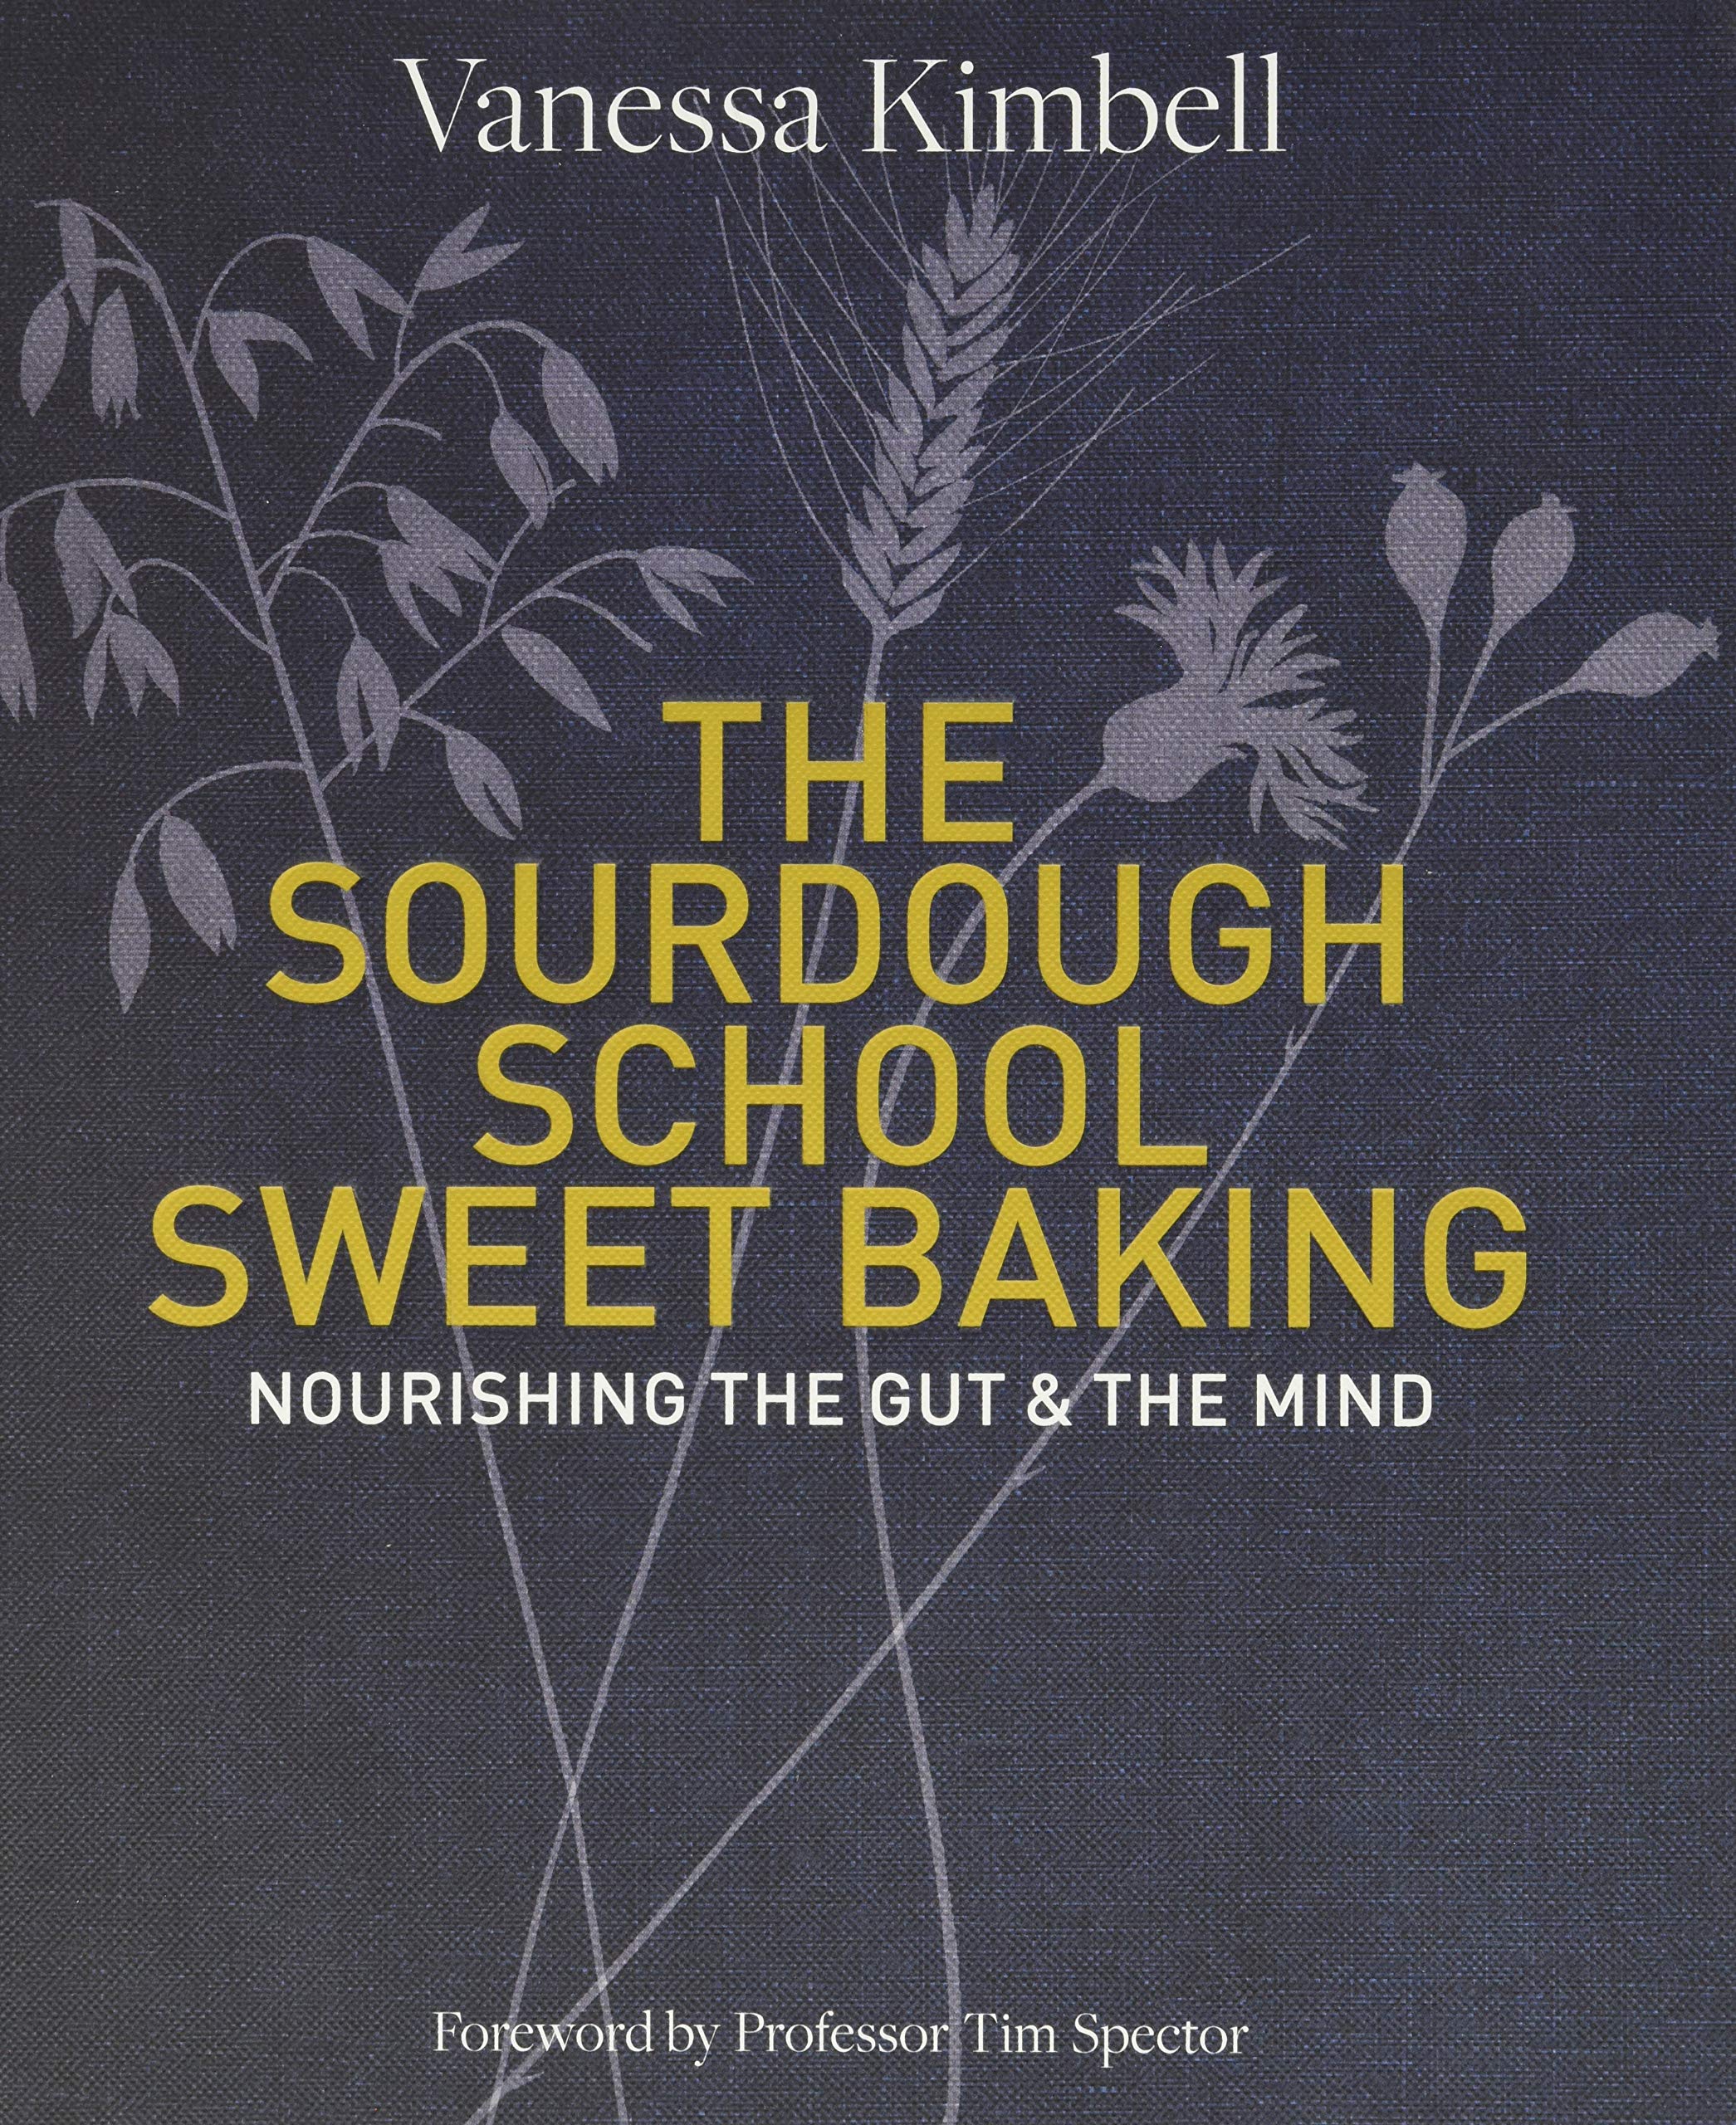 The Sourdough School: Sweet Baking: Nourishing the Gut & The Mind (Vanessa Kimball)